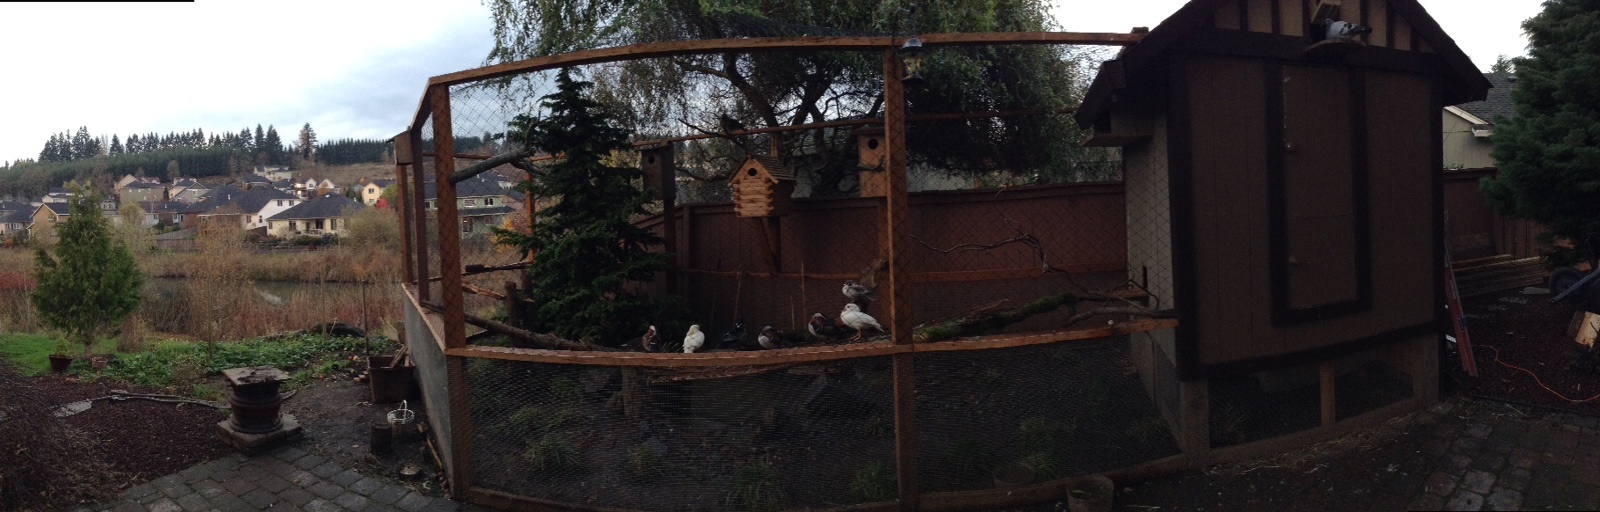 Panorama photo of aviary and coop